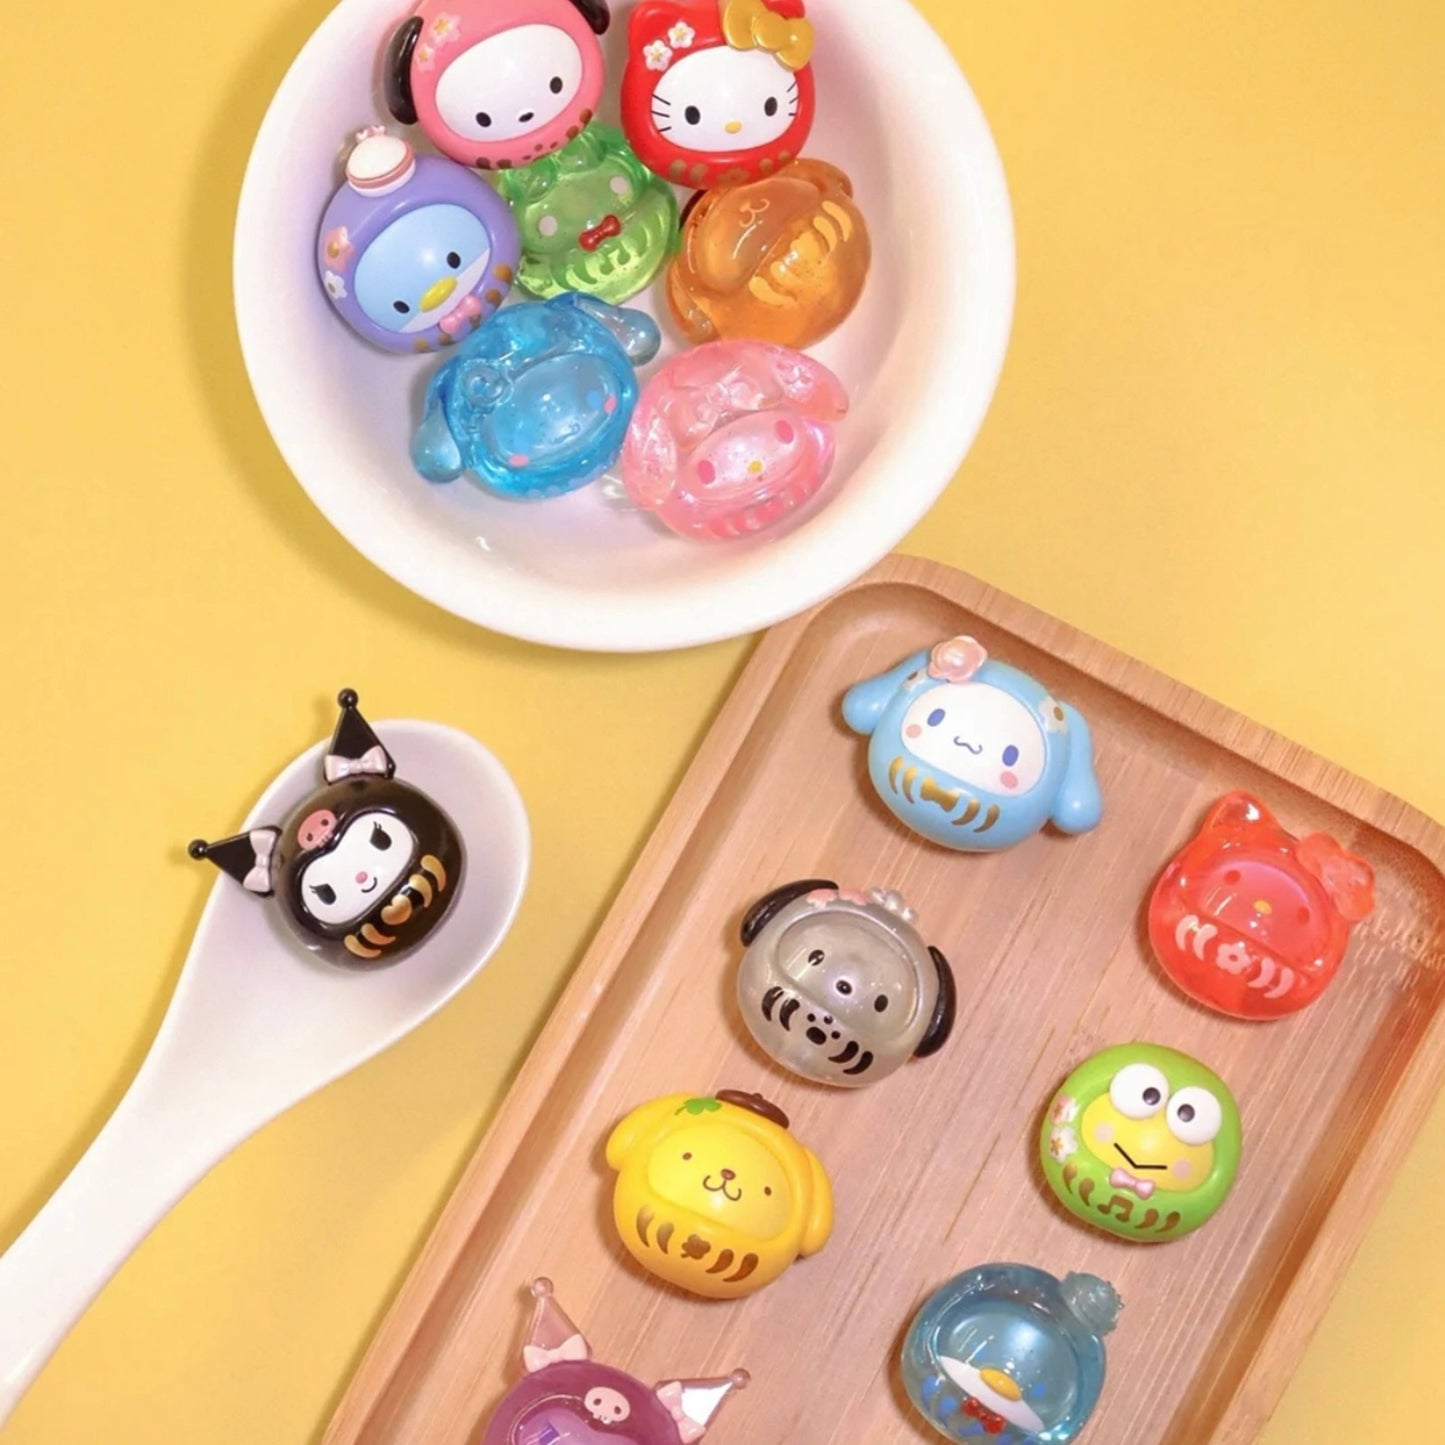 Top Toy Sanrio Characters Mini Daruma Beans Blind Bag - Whole Set of 16